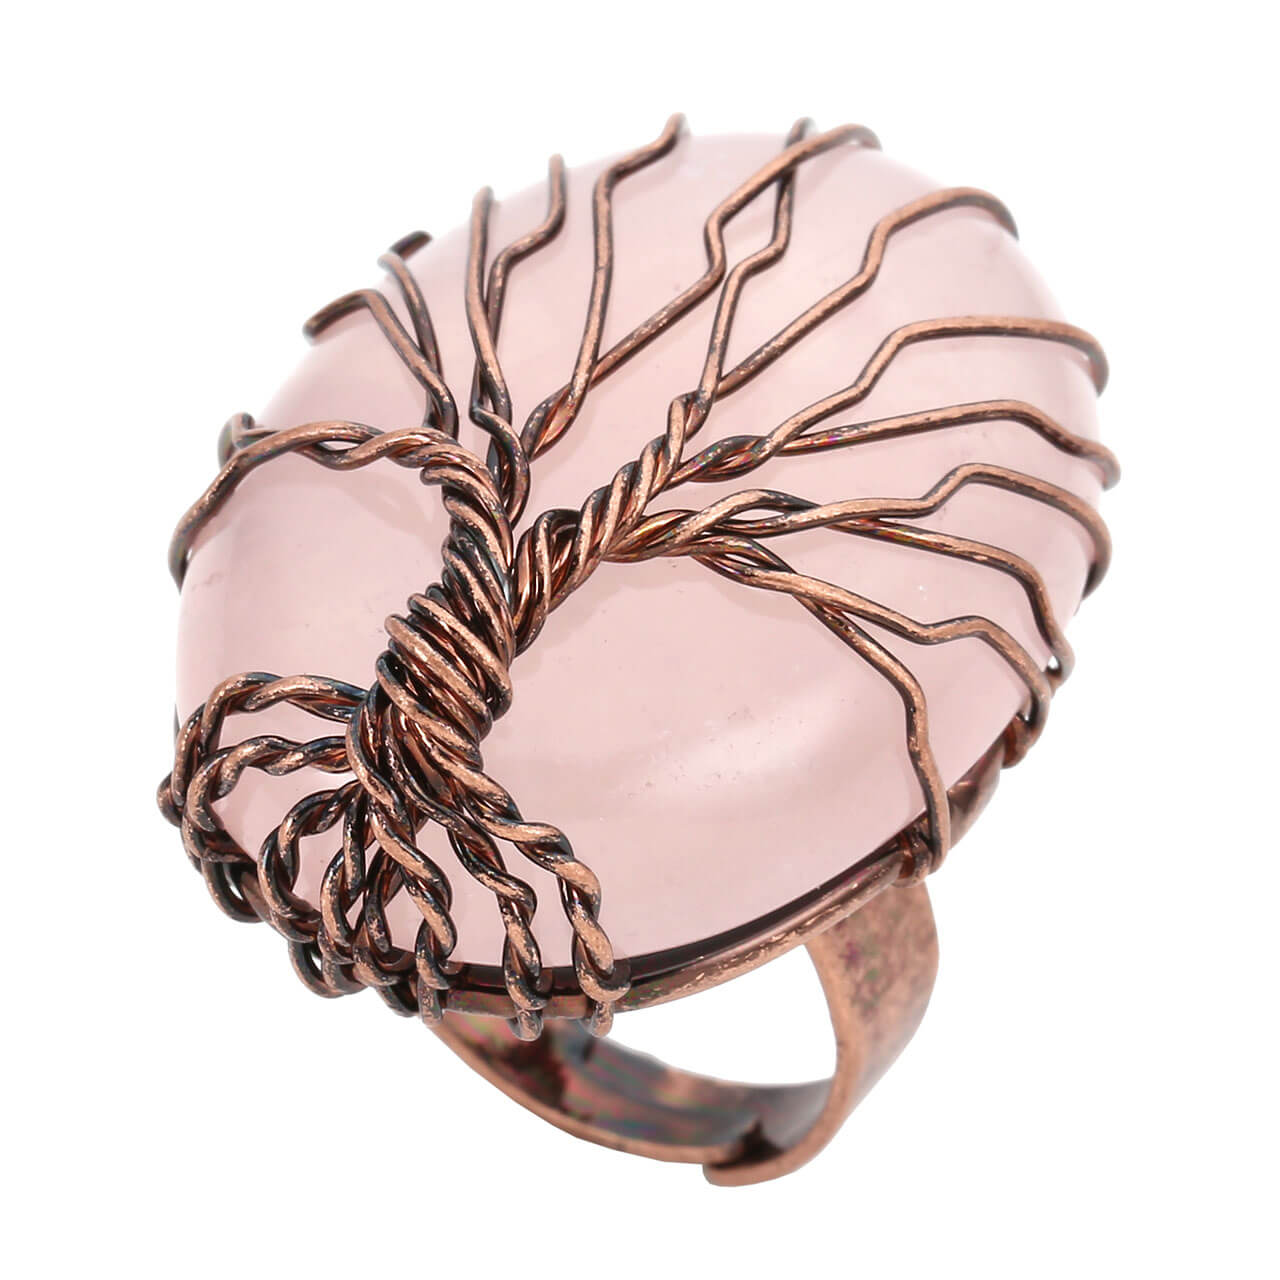 jkr012402 Handmade wire wrapped copper chakra gemstone beads band finger ring